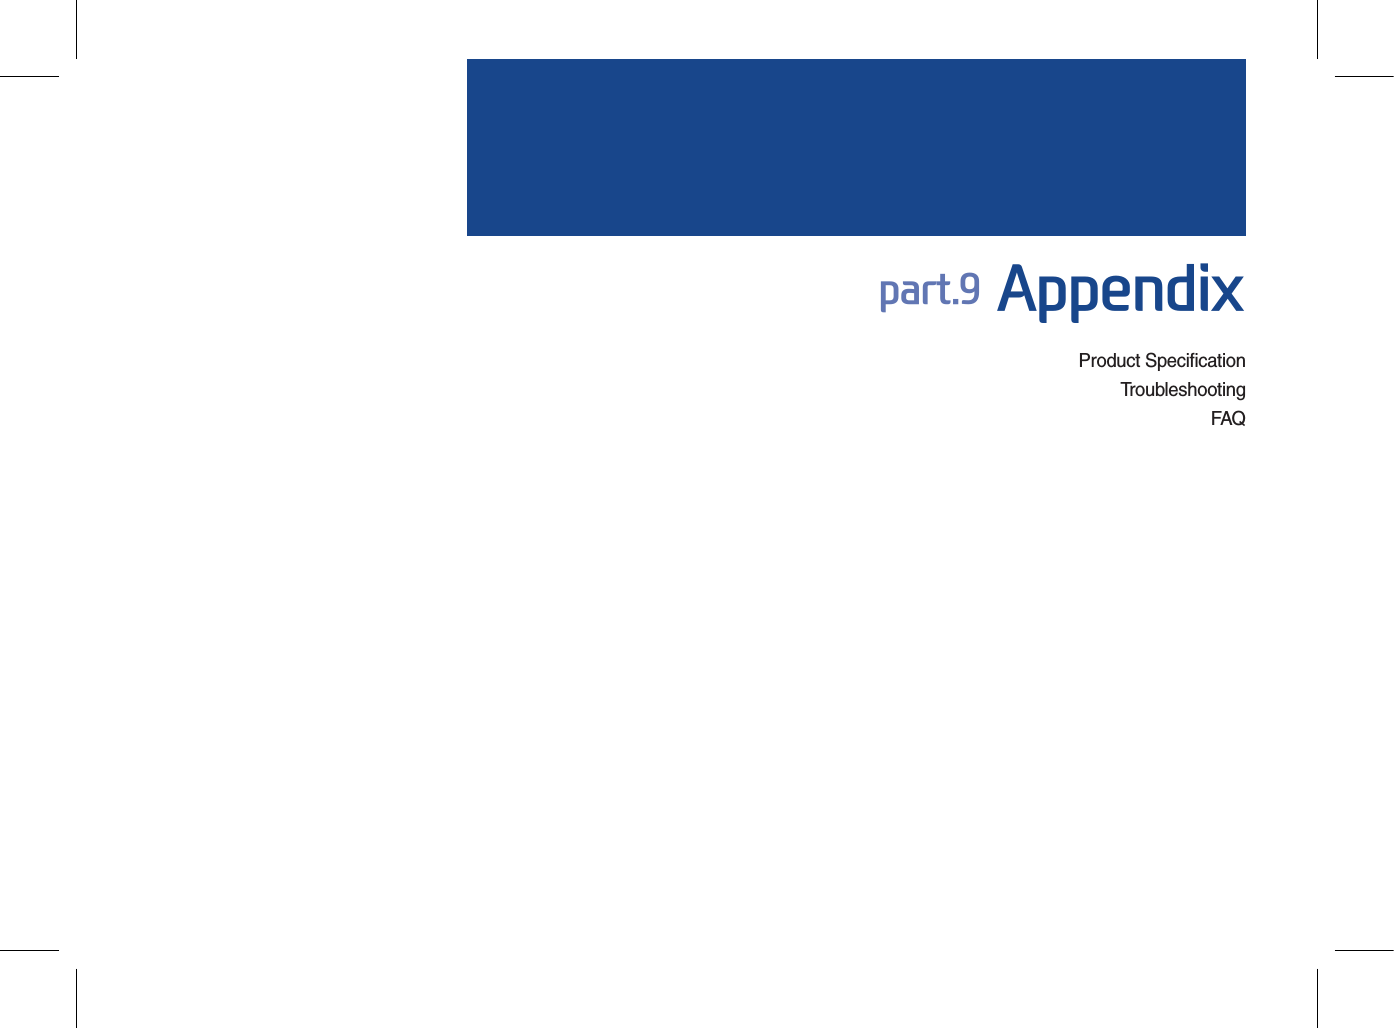 Product Specification  TroubleshootingFAQpart.9 Appendix